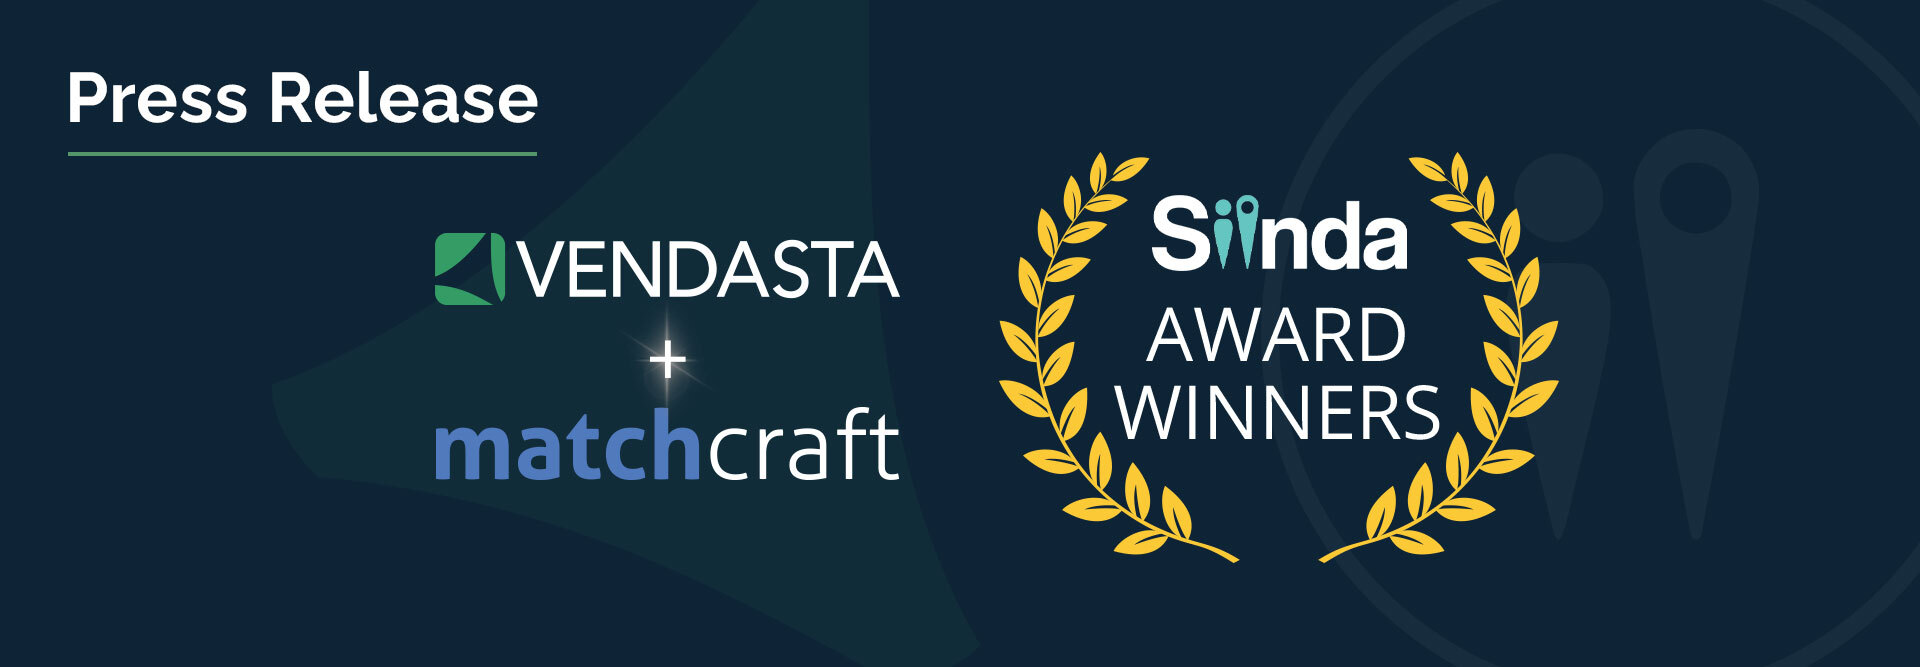 Matchcraft and Vendasta win Siinda Awards